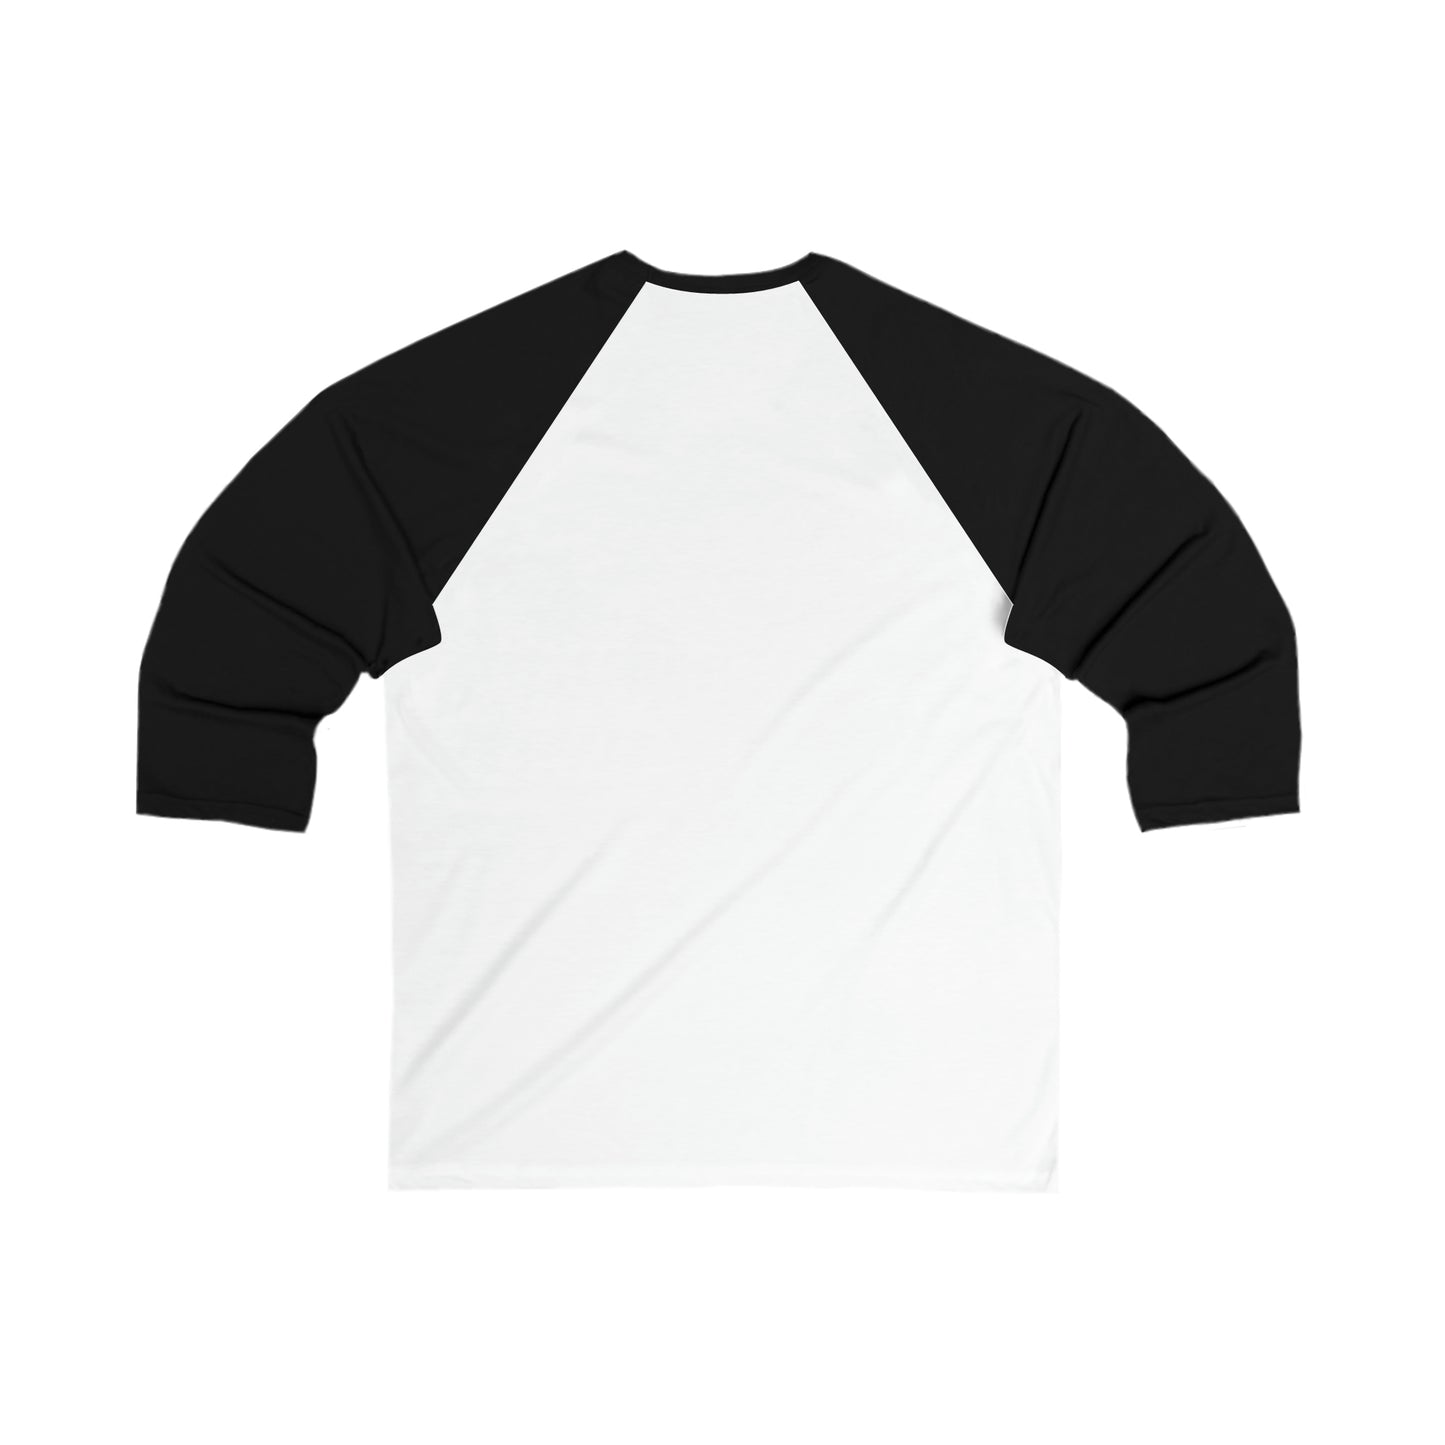 Unisex Sleeve Baseball Tee "Black and White"